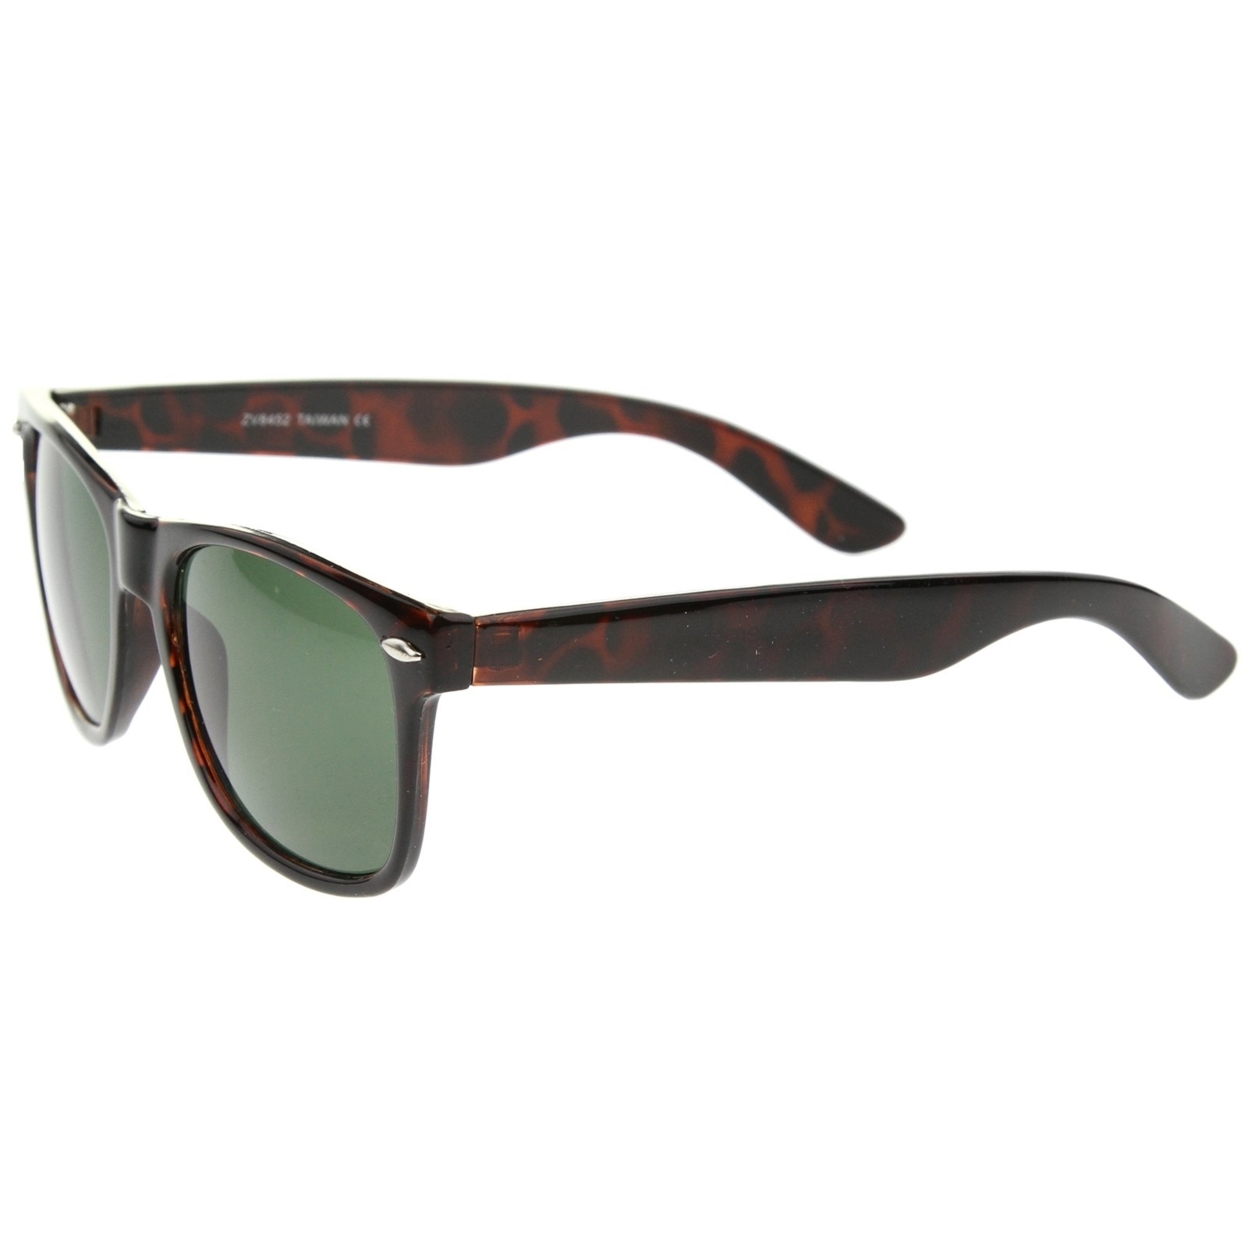 Classic Eyewear Iconic 80's Retro Large Horn Rimmed Sunglasses 54mm - Tortoise / Green